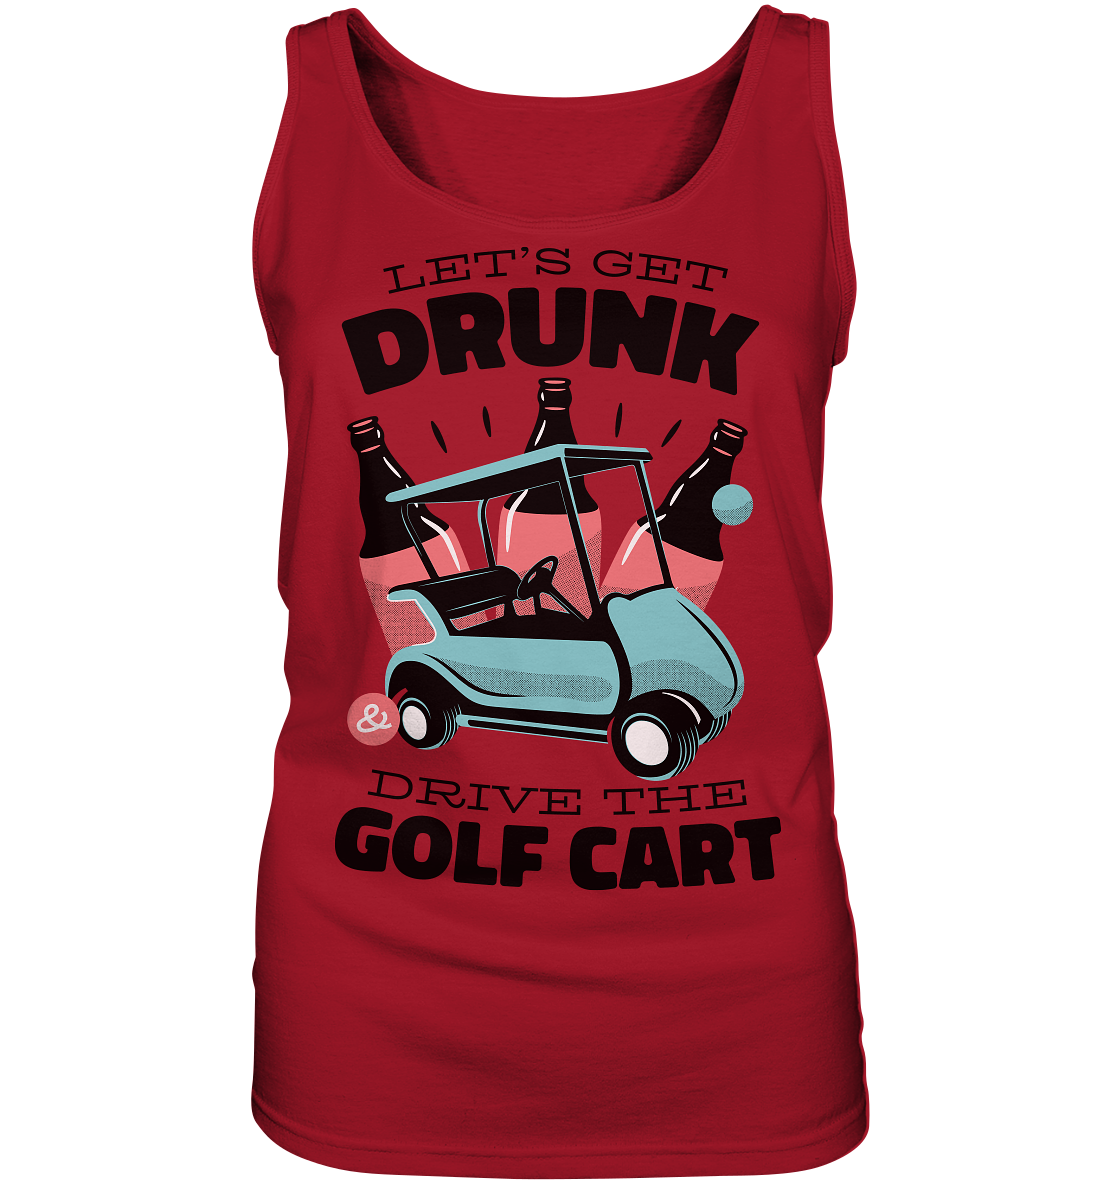 Let's get drunk drive the golf cart - Ladies tank top